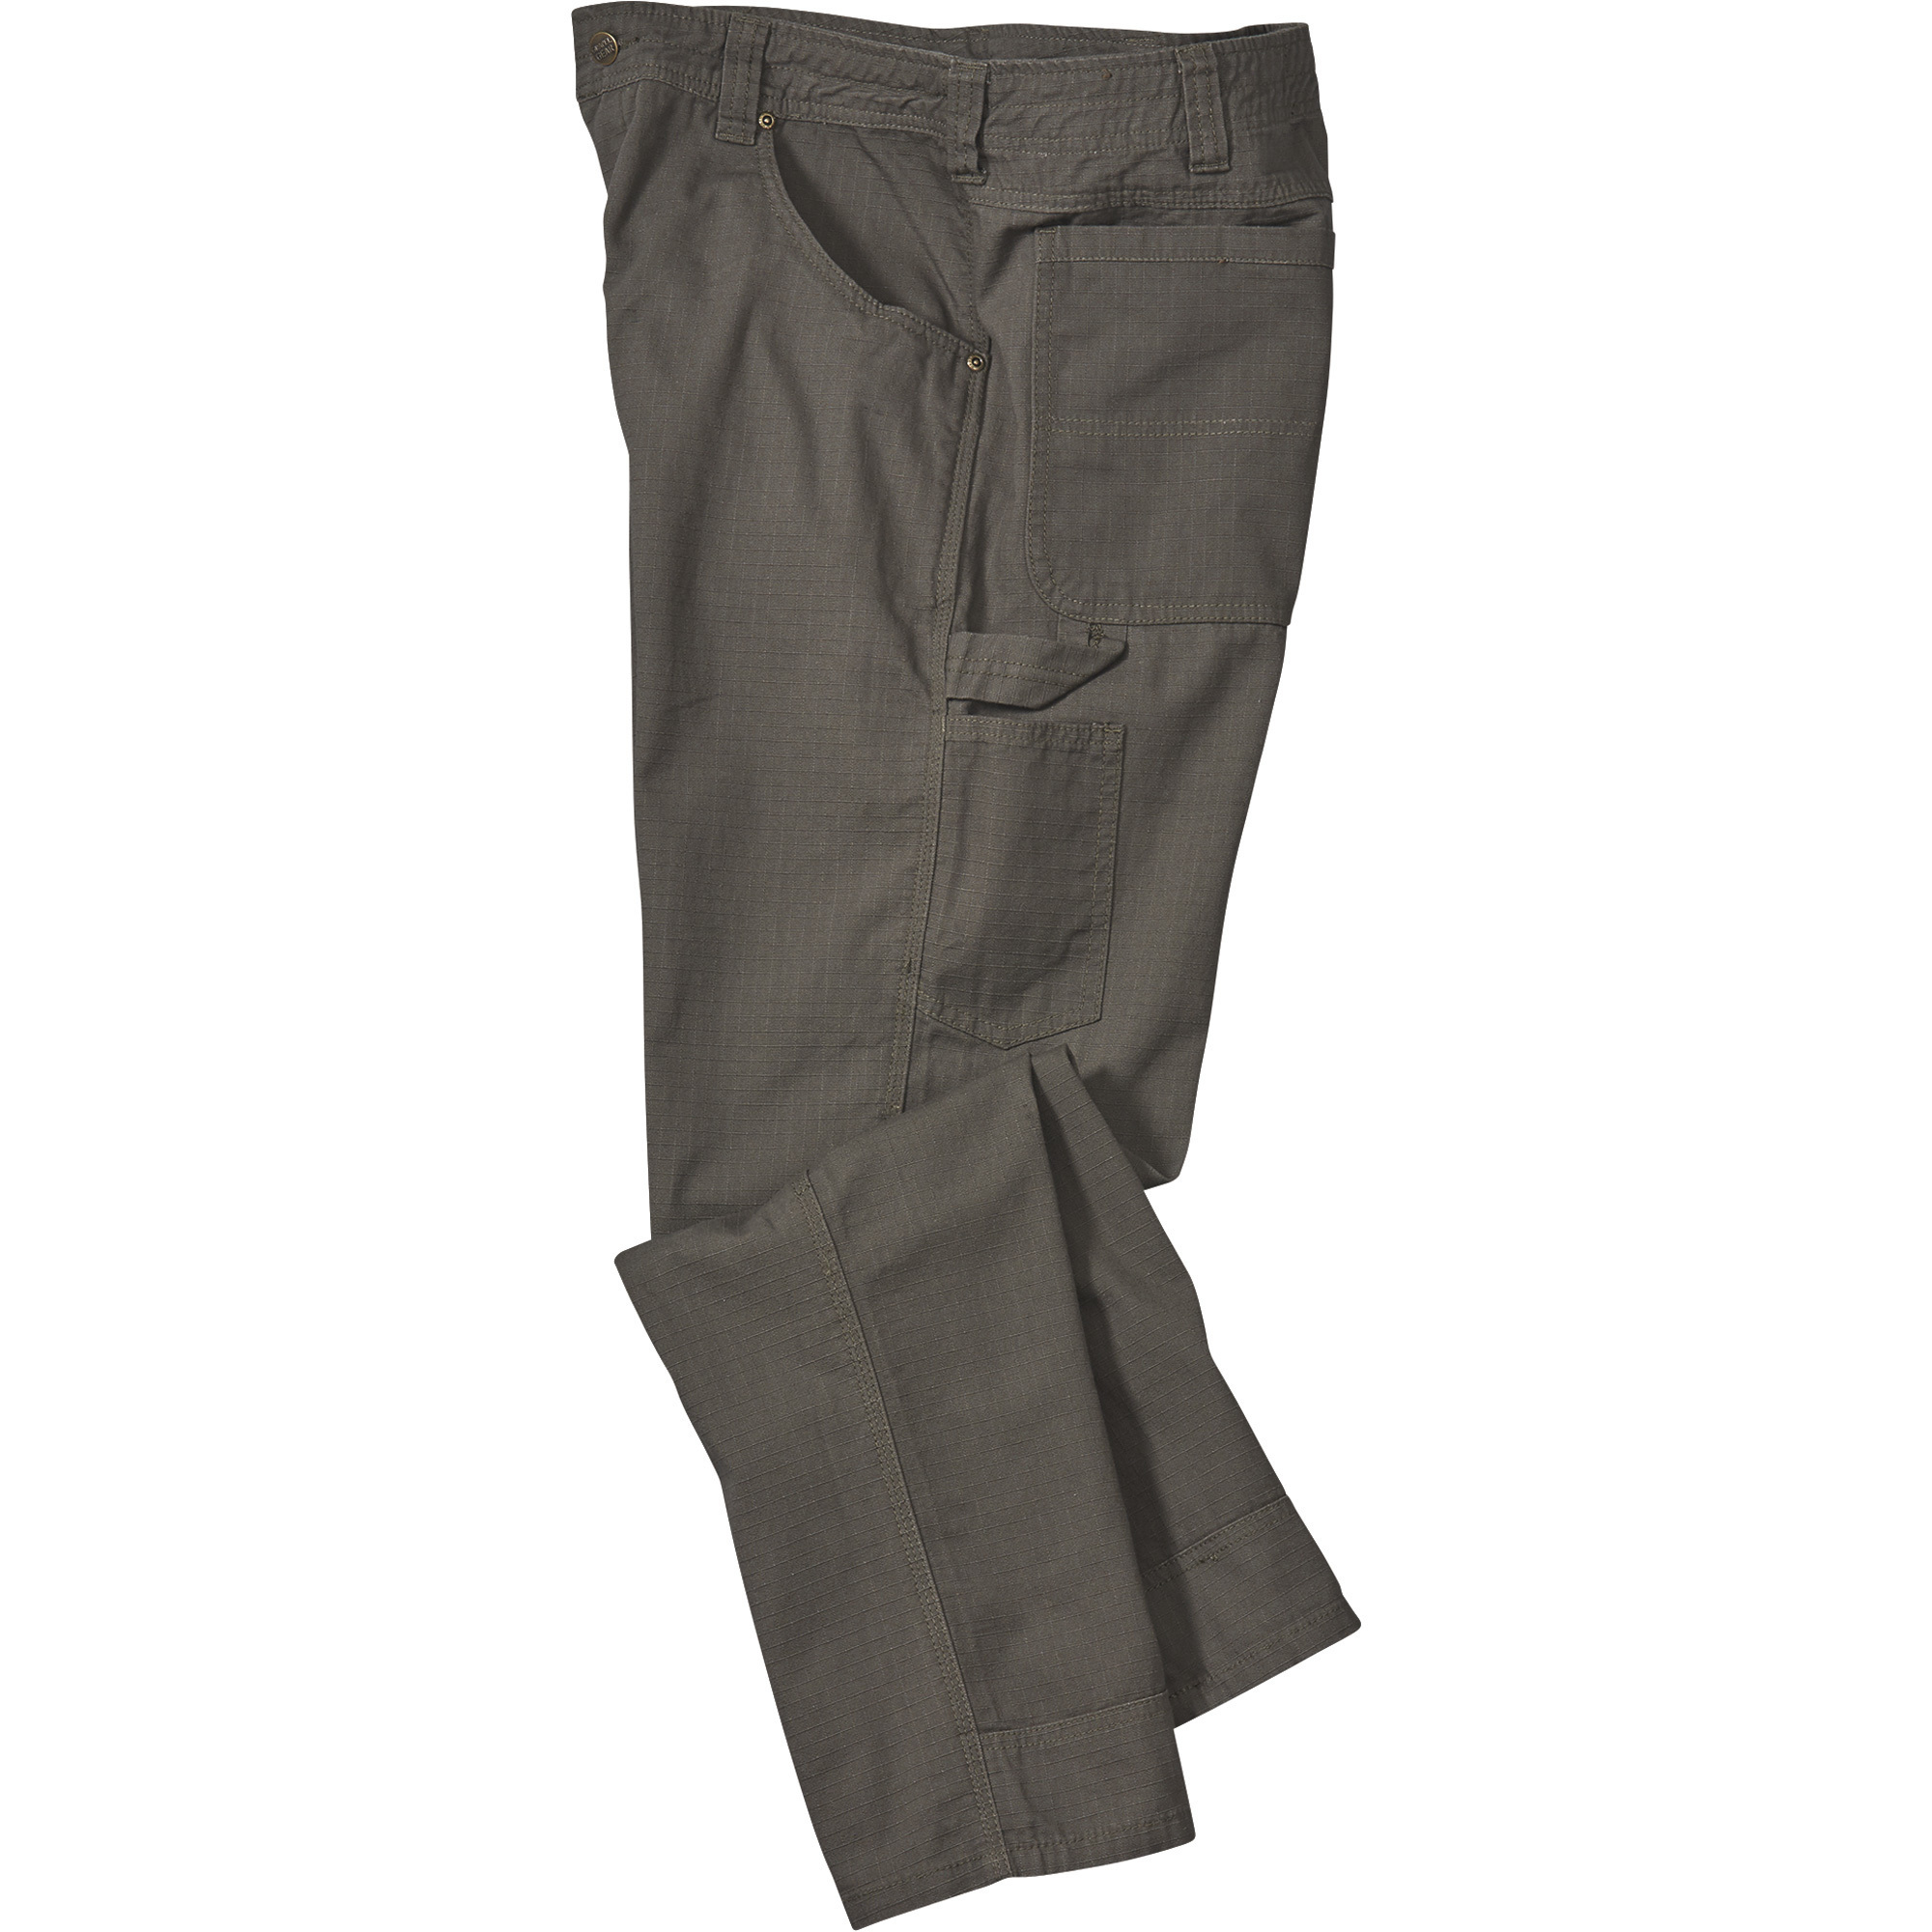 Gravel Gear Men's Cotton Ripstop Carpenter Pants with Teflon Fabric Protector â Moss, 30Inch Waist x 30Inch Inseam